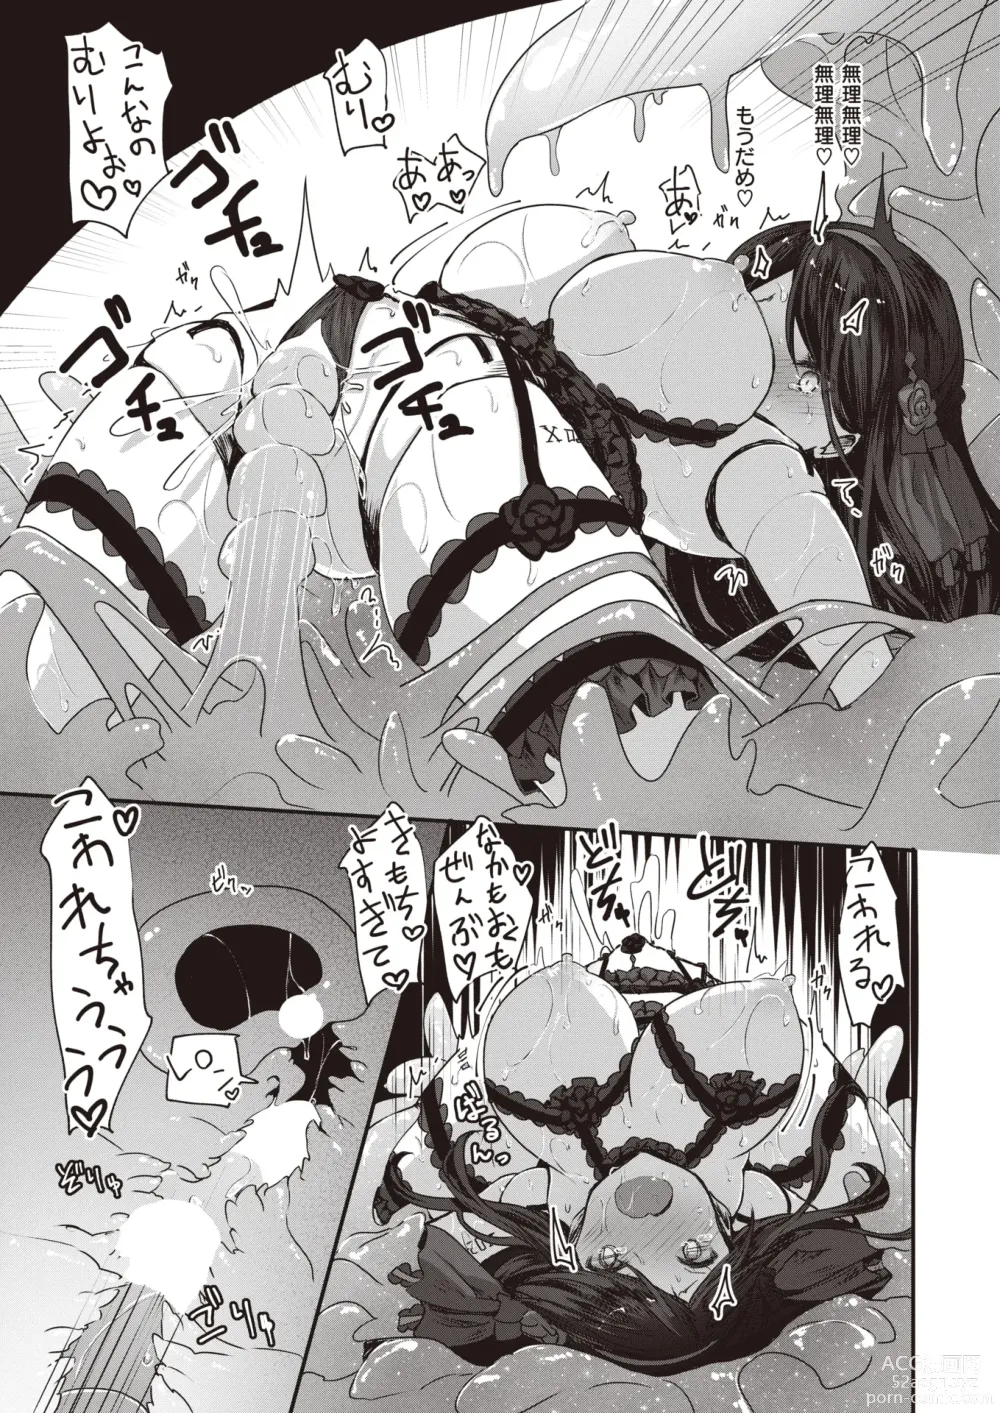 Page 96 of manga Isekai Rakuten Vol. 27